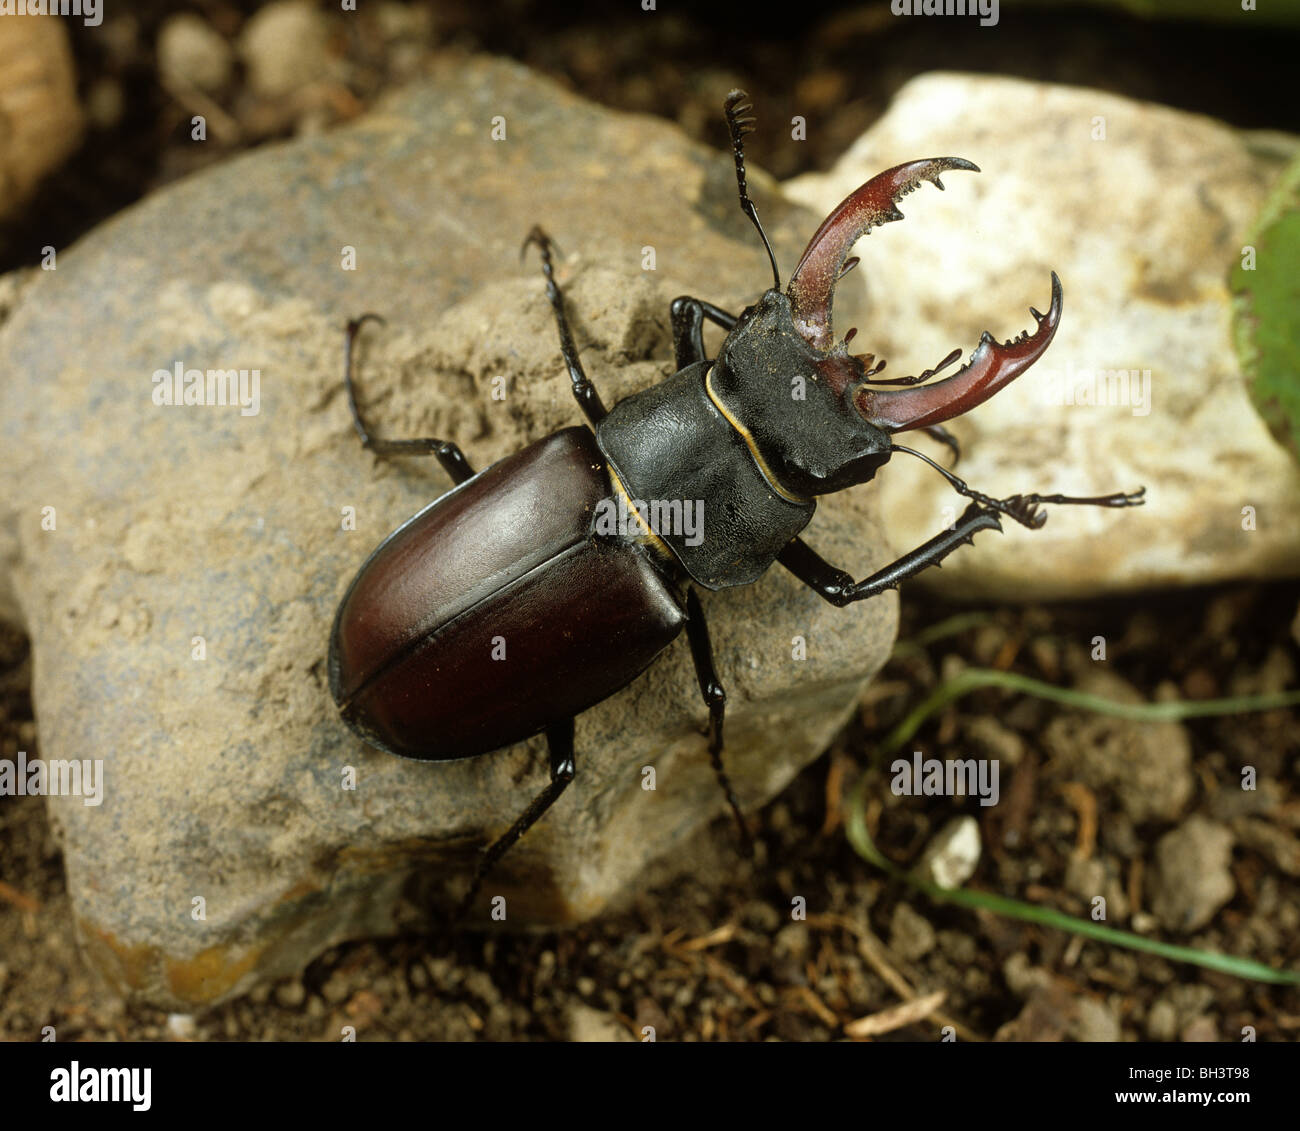 Male stag beetle (Lucanus cervus) on leaf litter with large mandibles Stock Photo